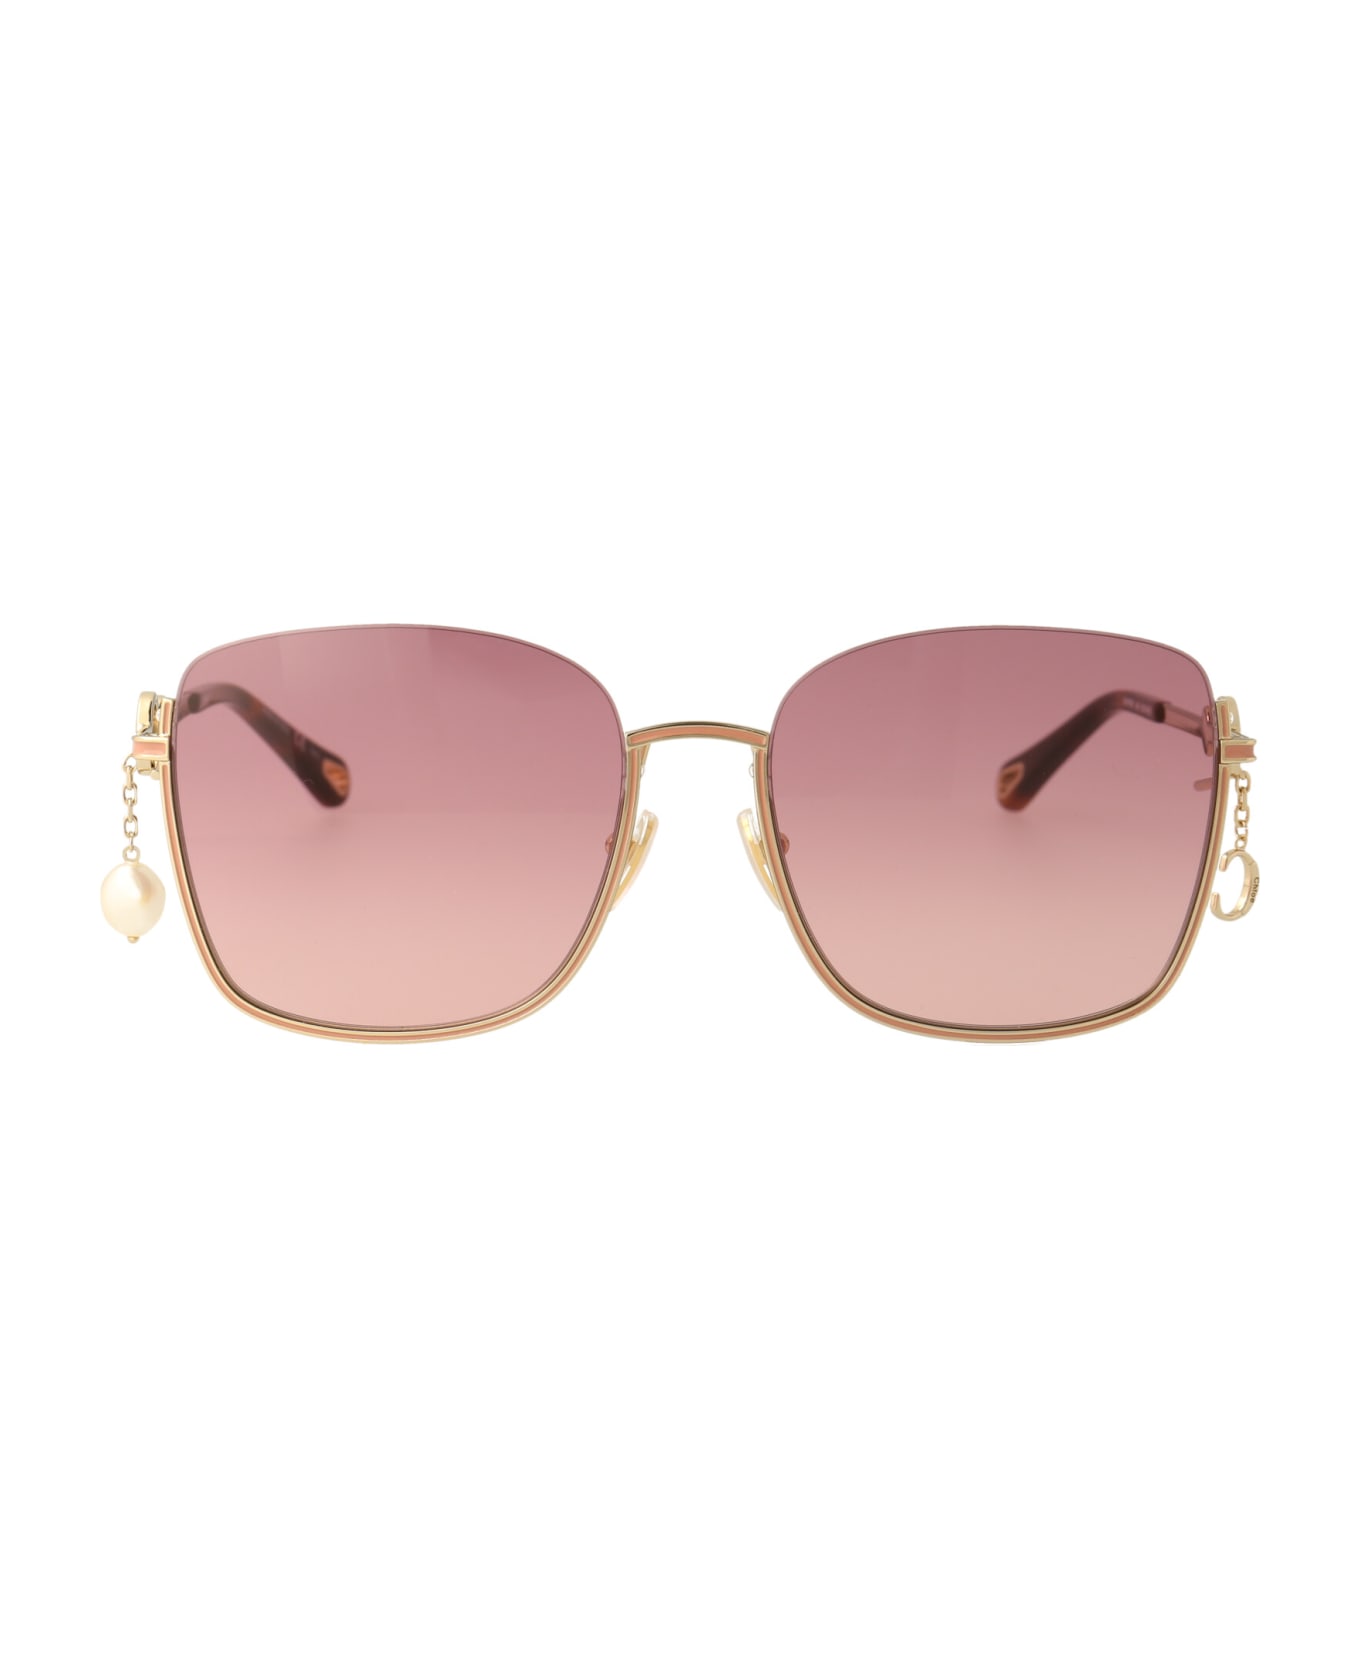 Chloé Eyewear Ch0070sk Sunglasses - 004 GOLD GOLD PINK サングラス